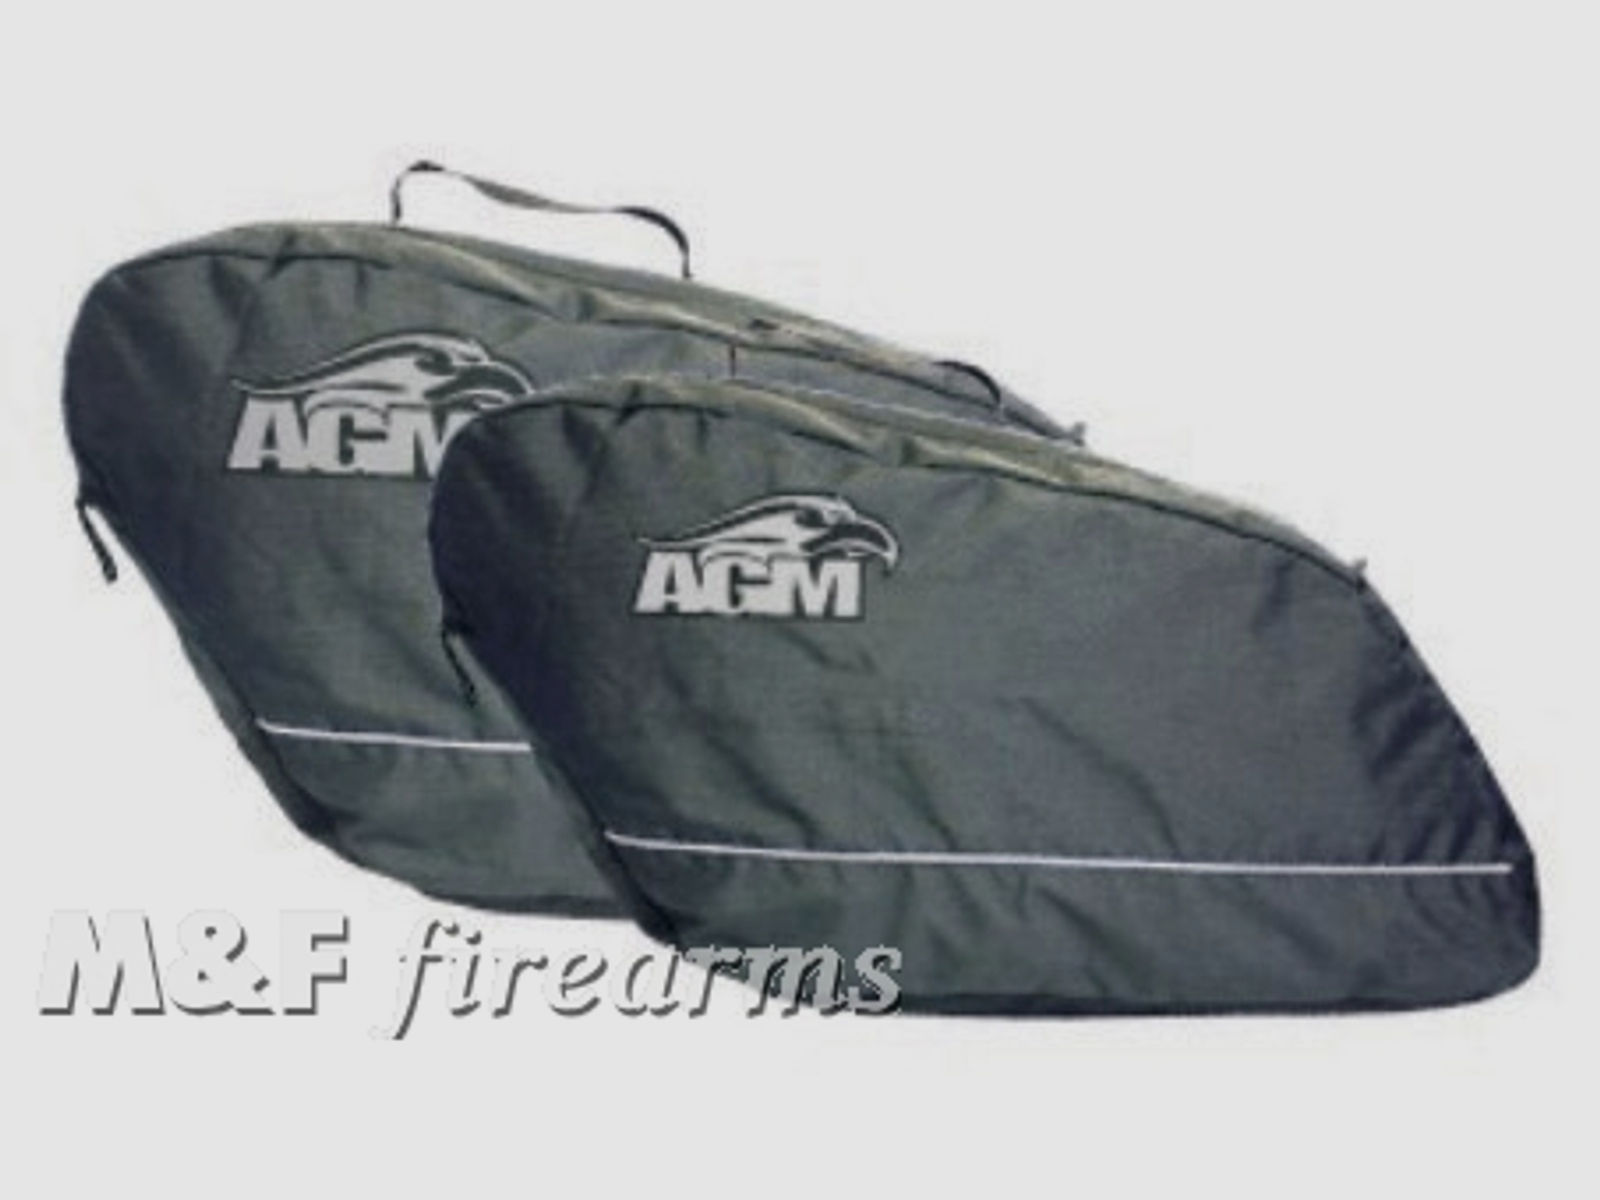 AGM Motorcycle Bags (Motorradtaschen) Innentaschen